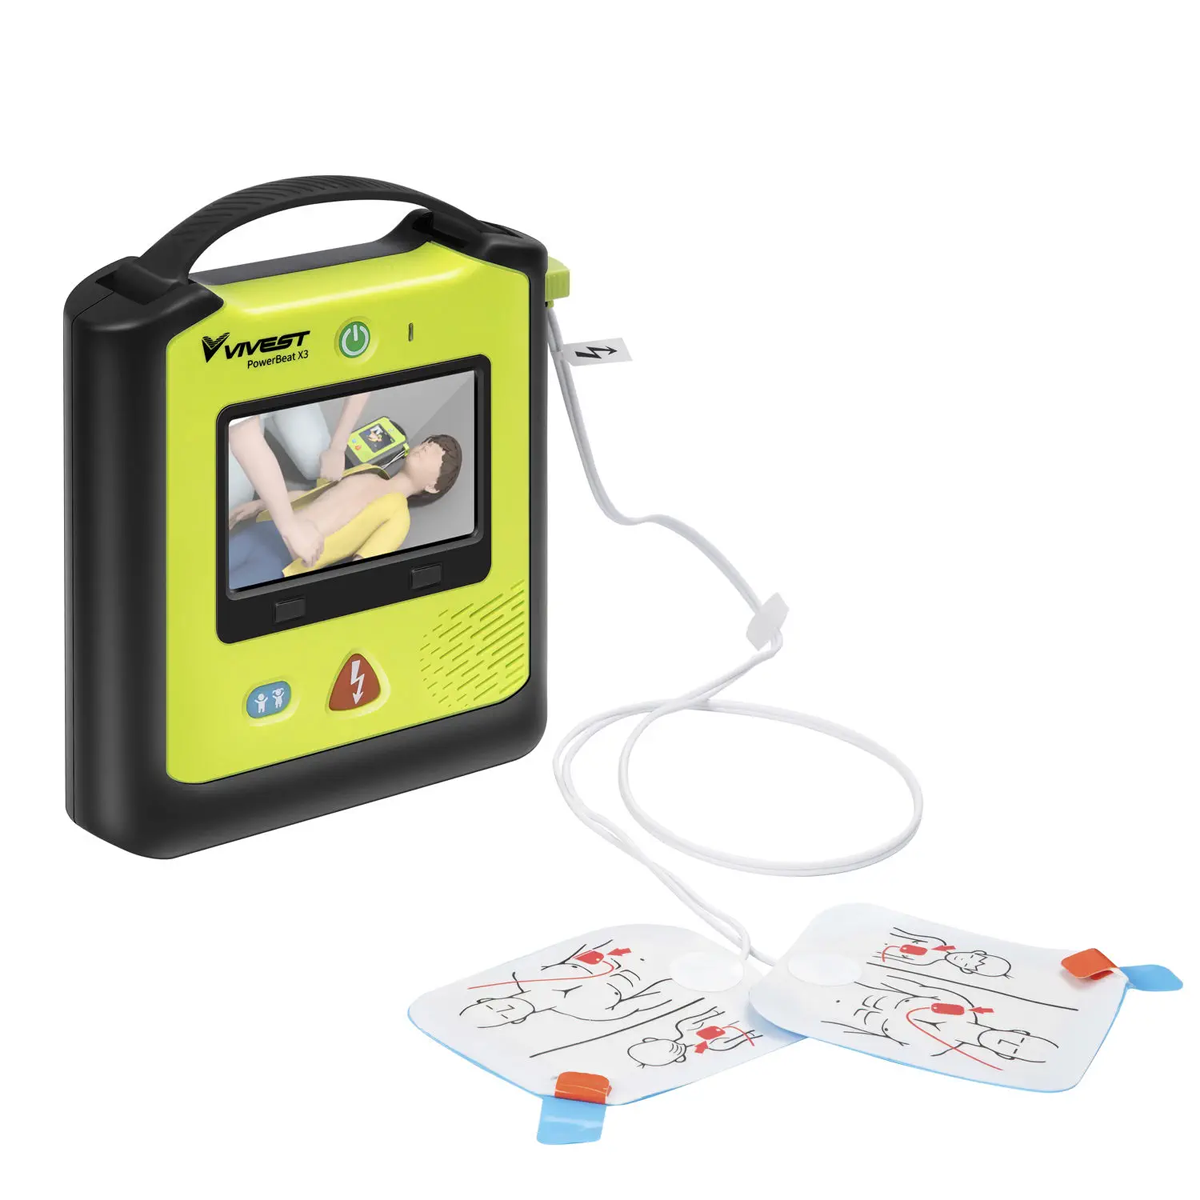 ViVest PowerBeat X3 Defibrillator 